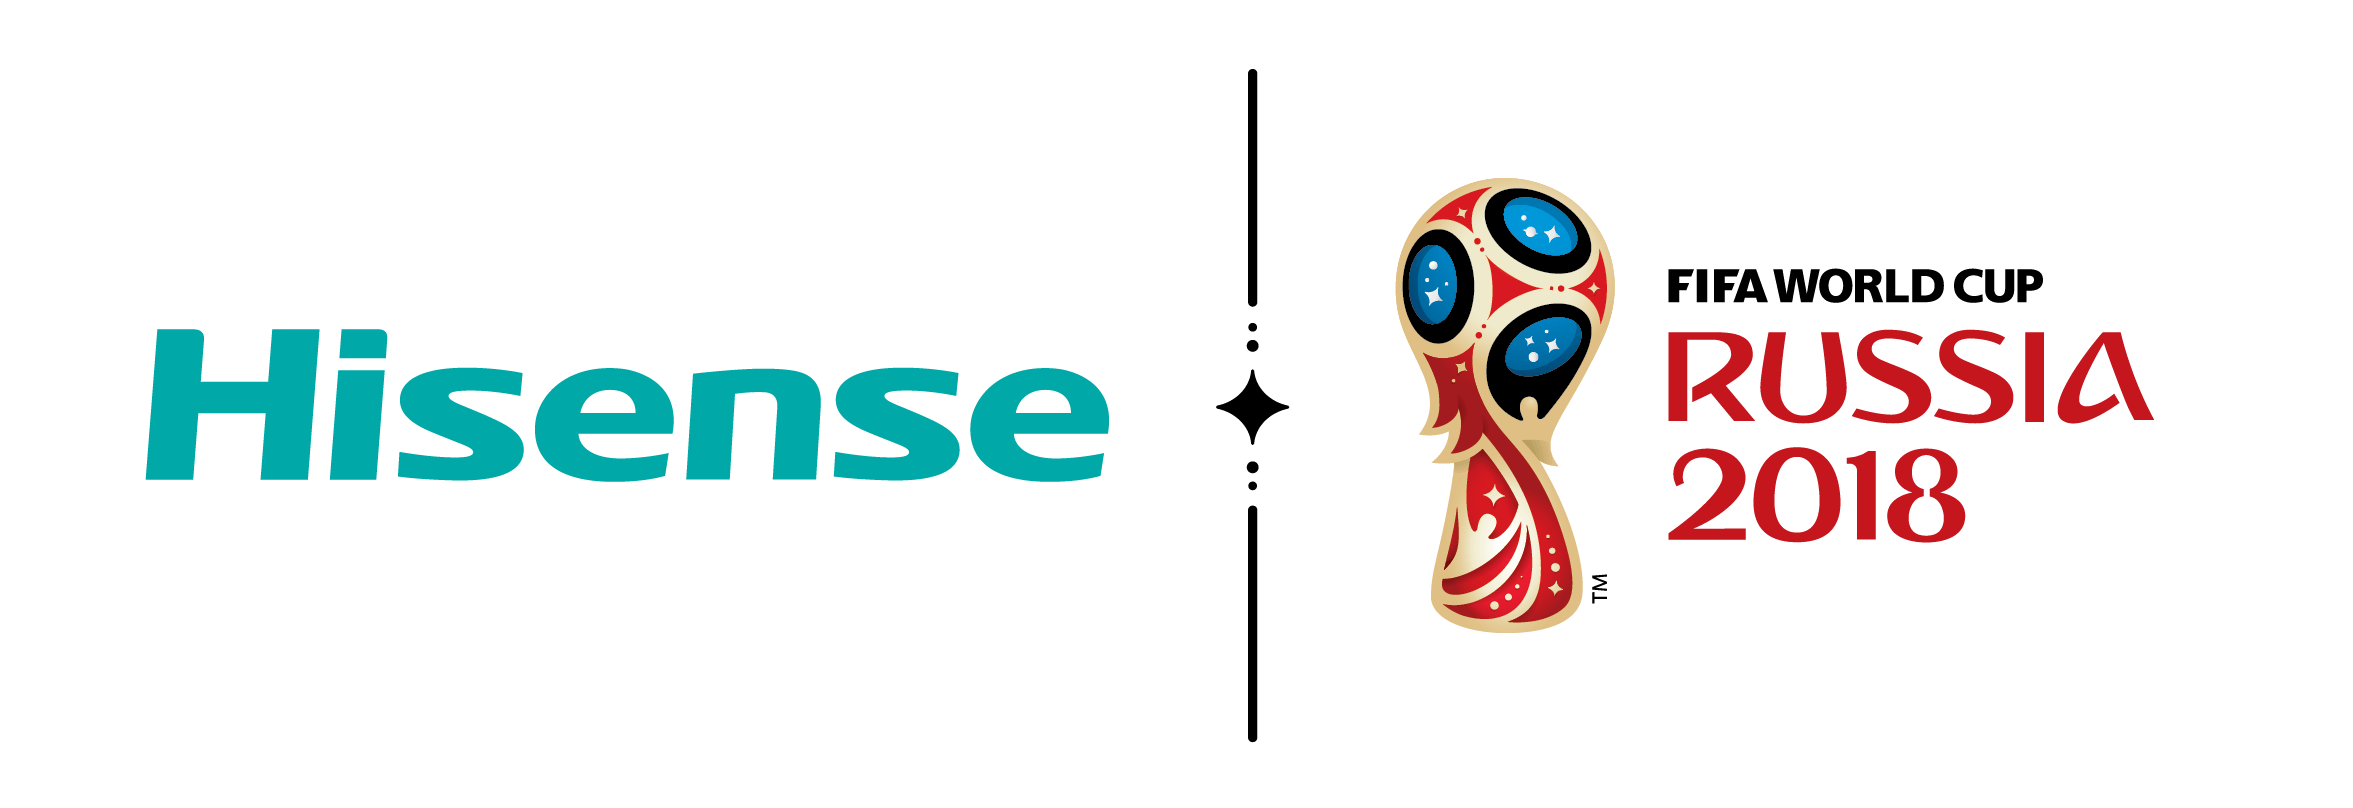 Hisense Logo - Amazon.com: Hisense 43